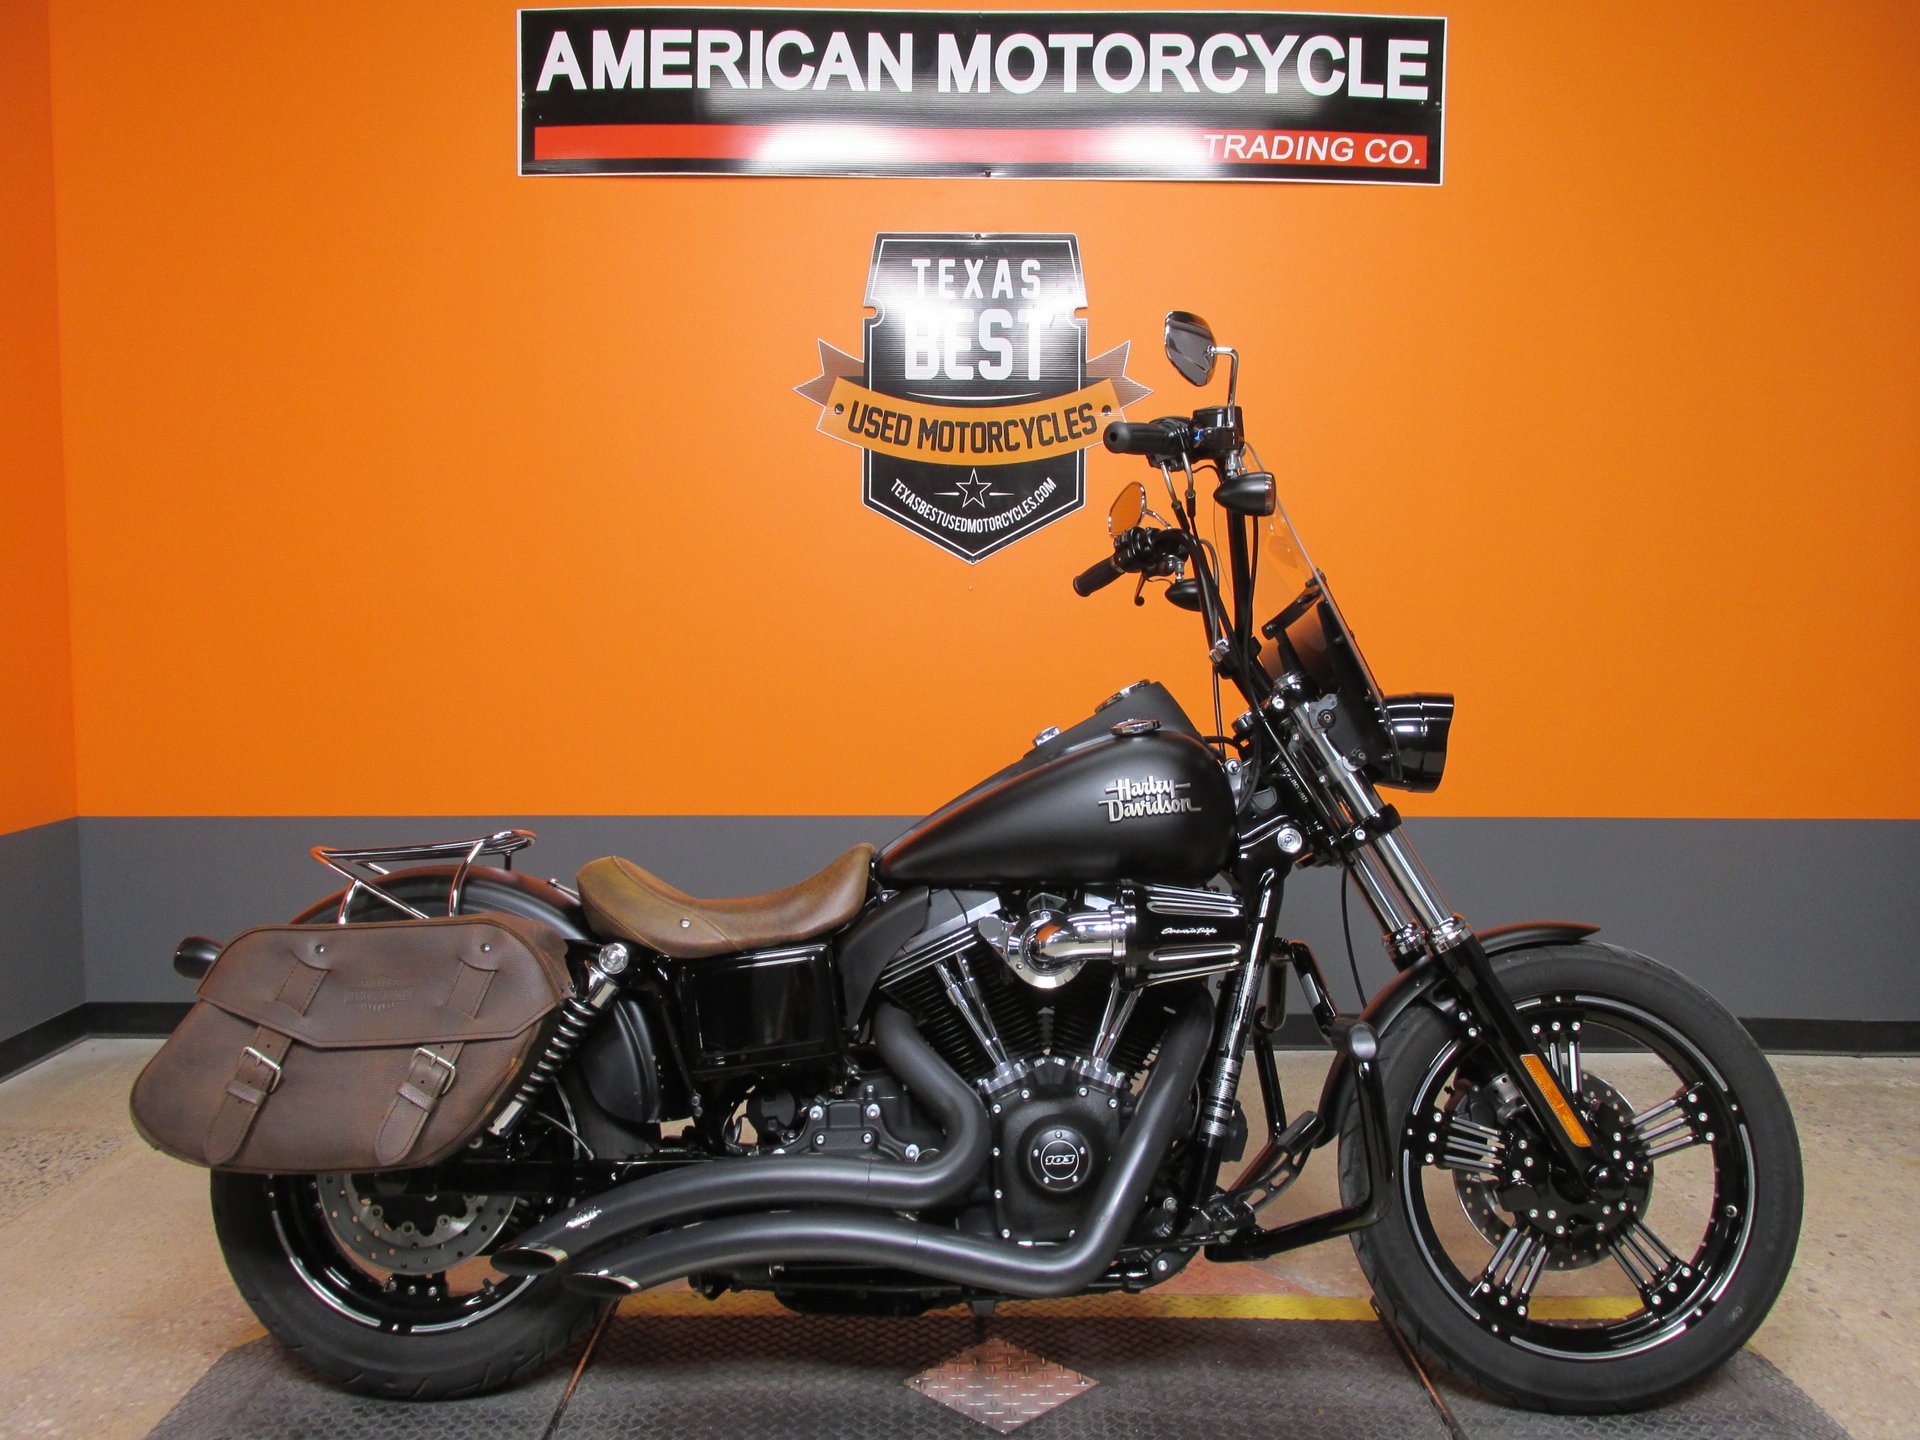 2013 HarleyDavidson Dyna Street Bob American Motorcycle Trading